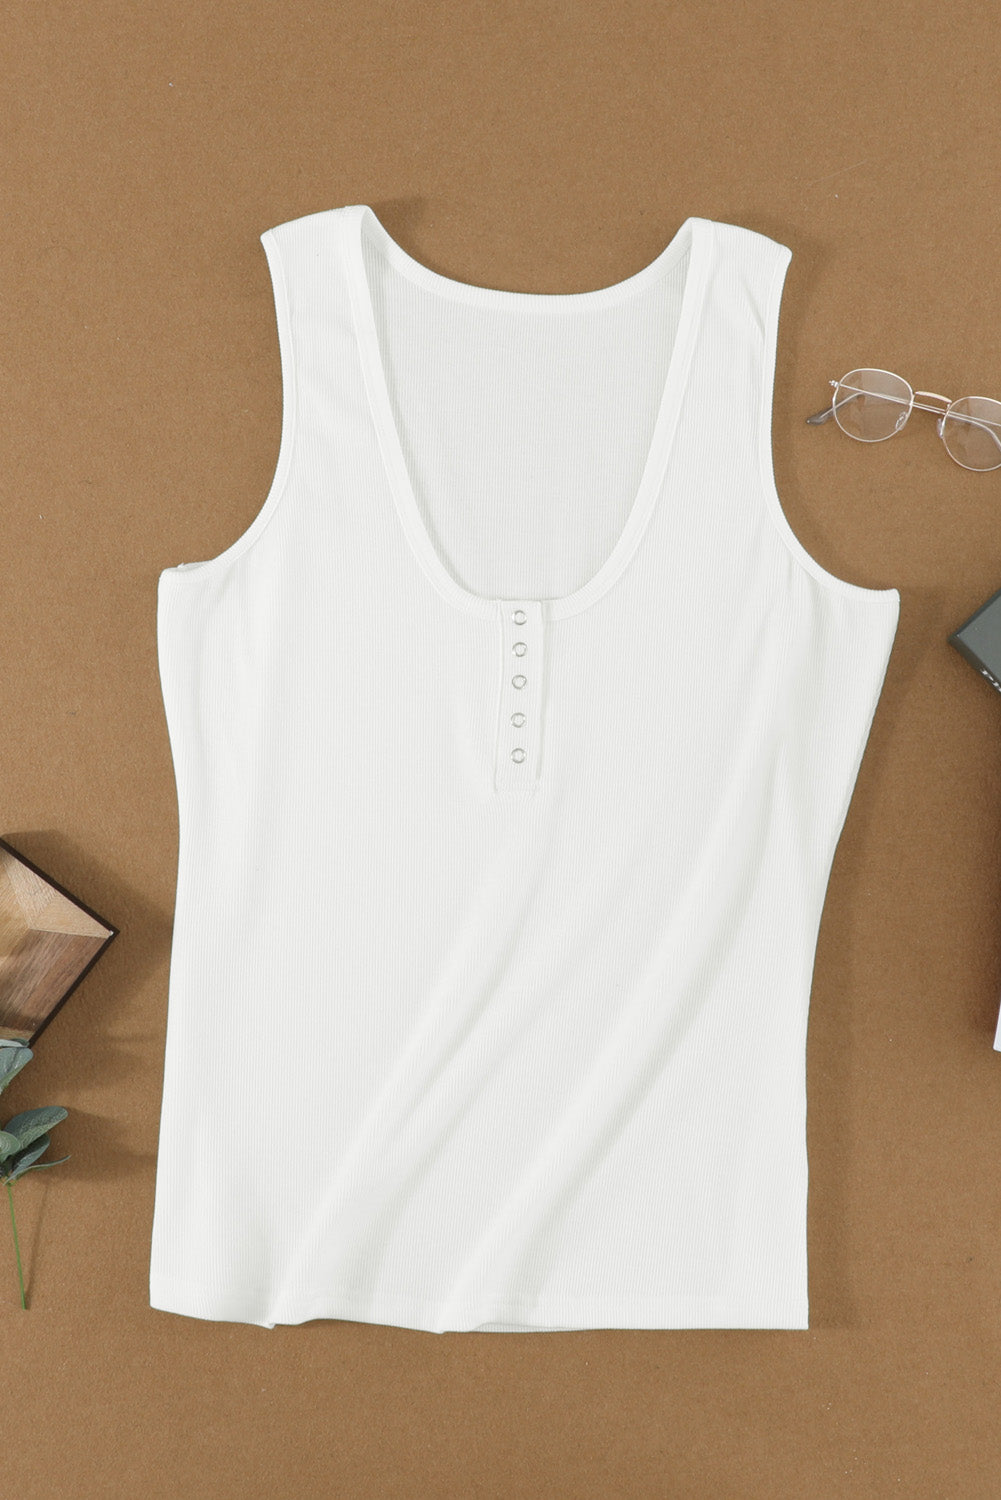 Women's White Sleeveless Scoop Neck Button Summer Tank Top